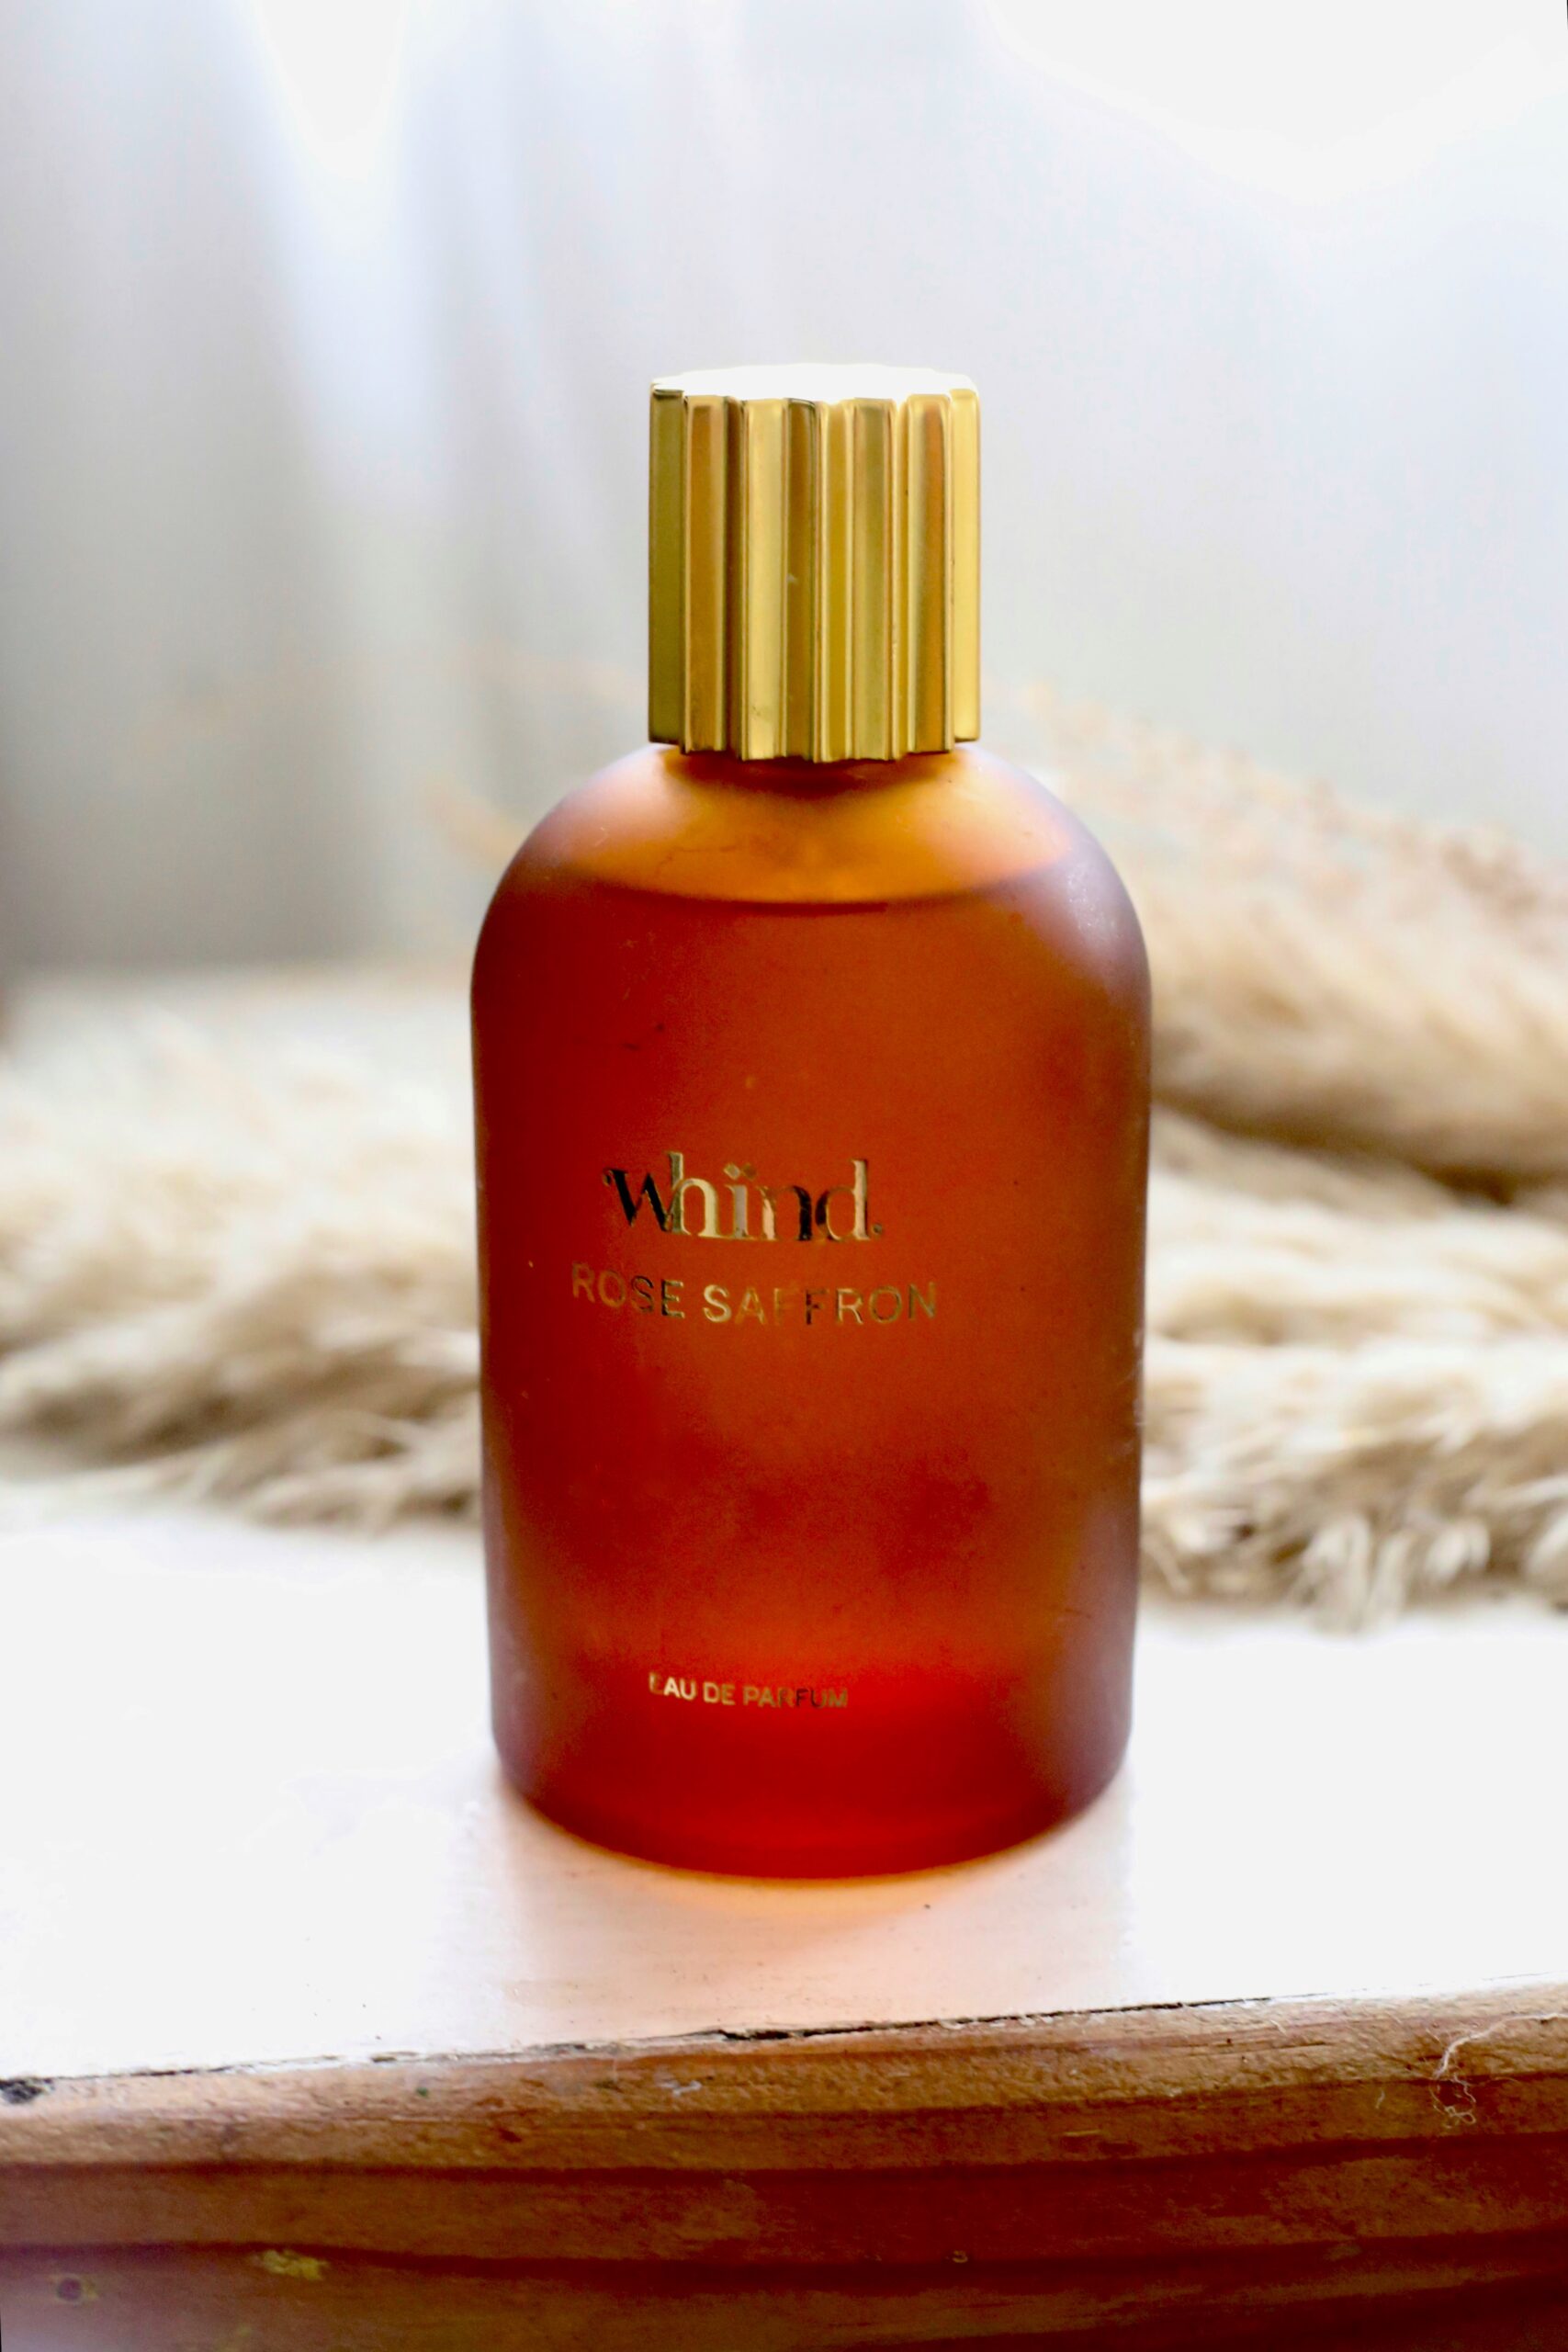 WHIND Fragrance Review (Rose Saffron)